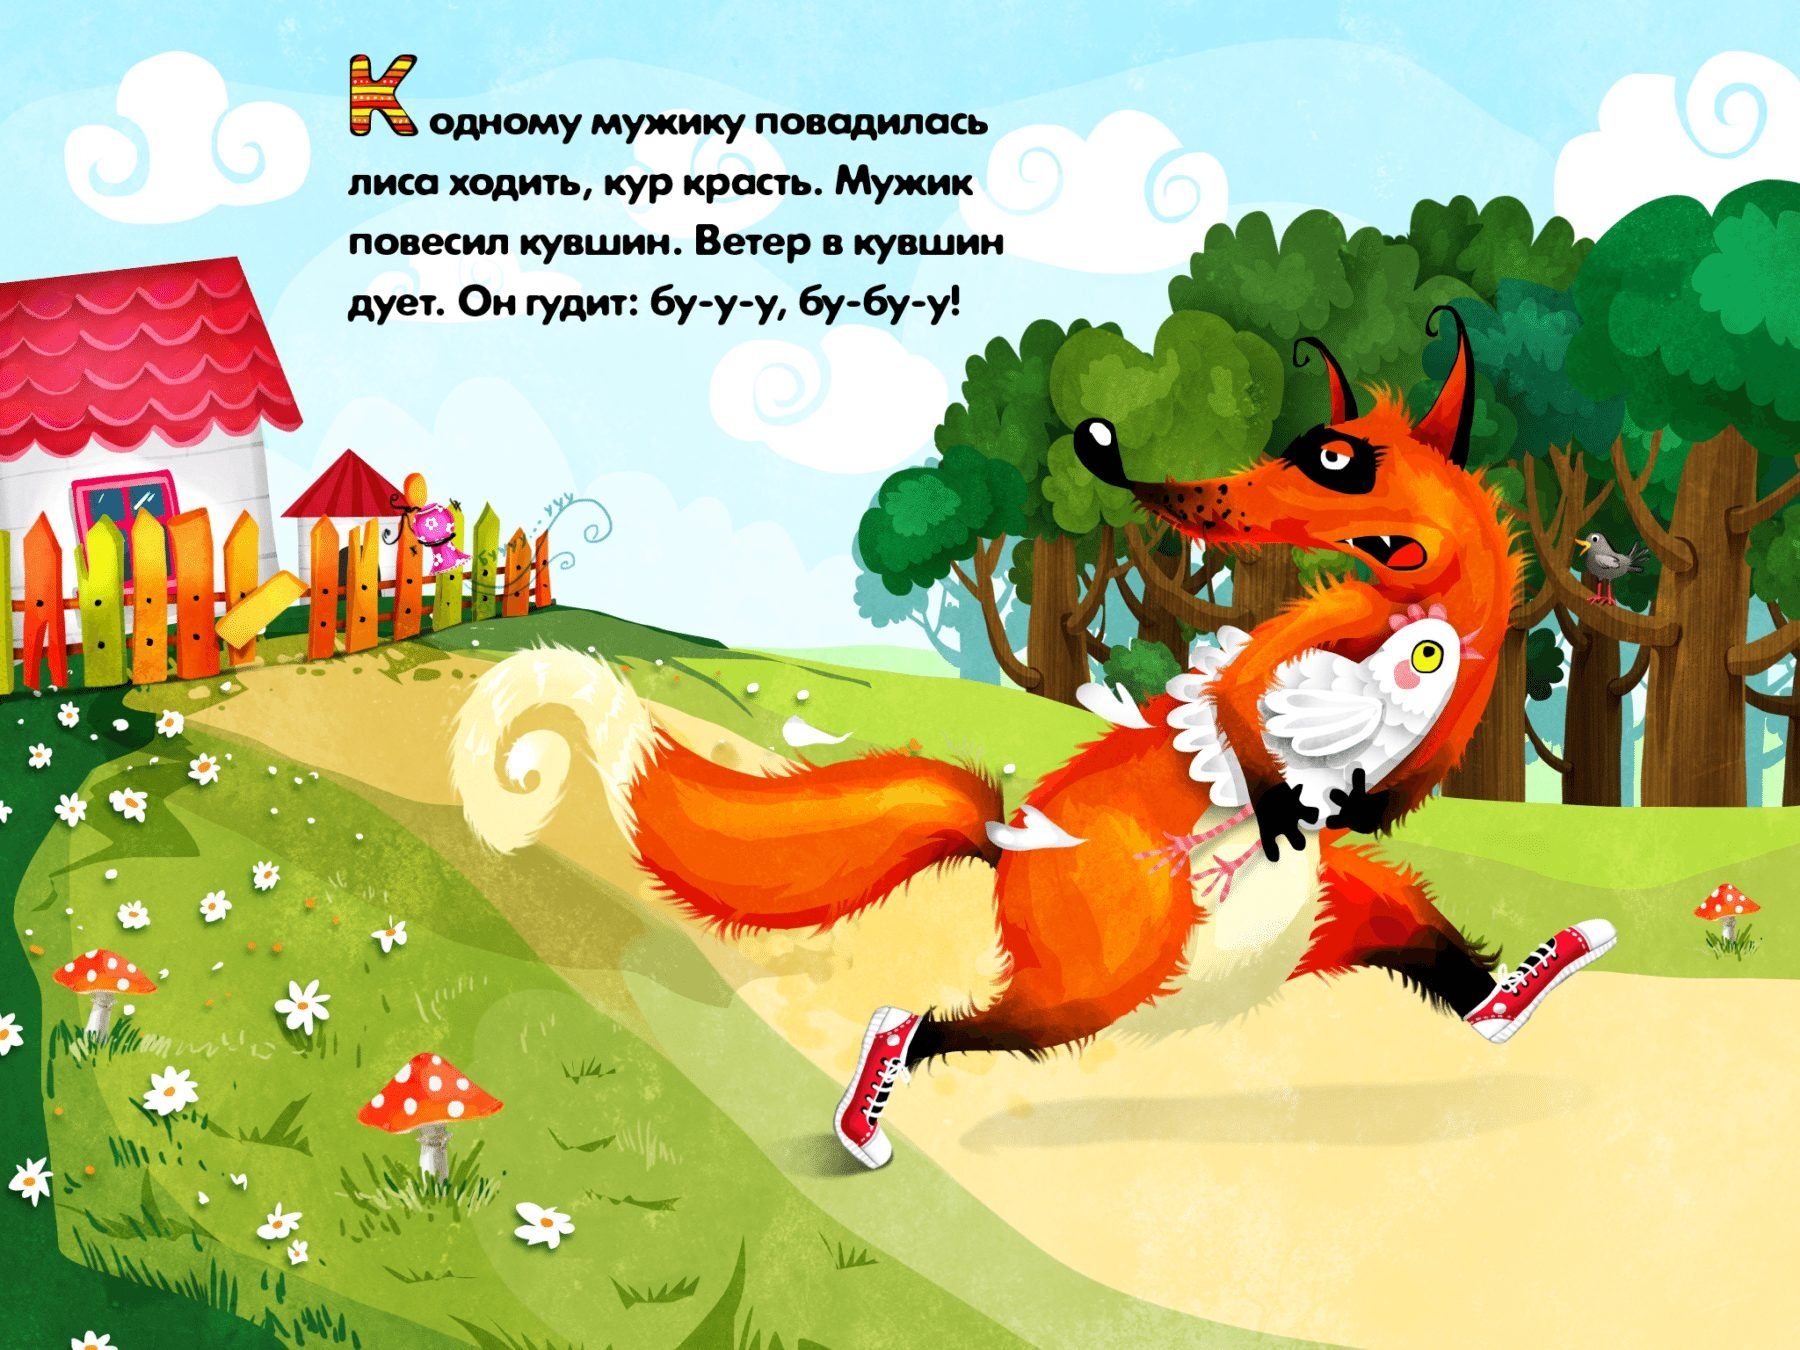 Детская сказка про. Сказки про лису. Лиса и кувшин. Сказки про лису русские народные. Детские сказки про лису.